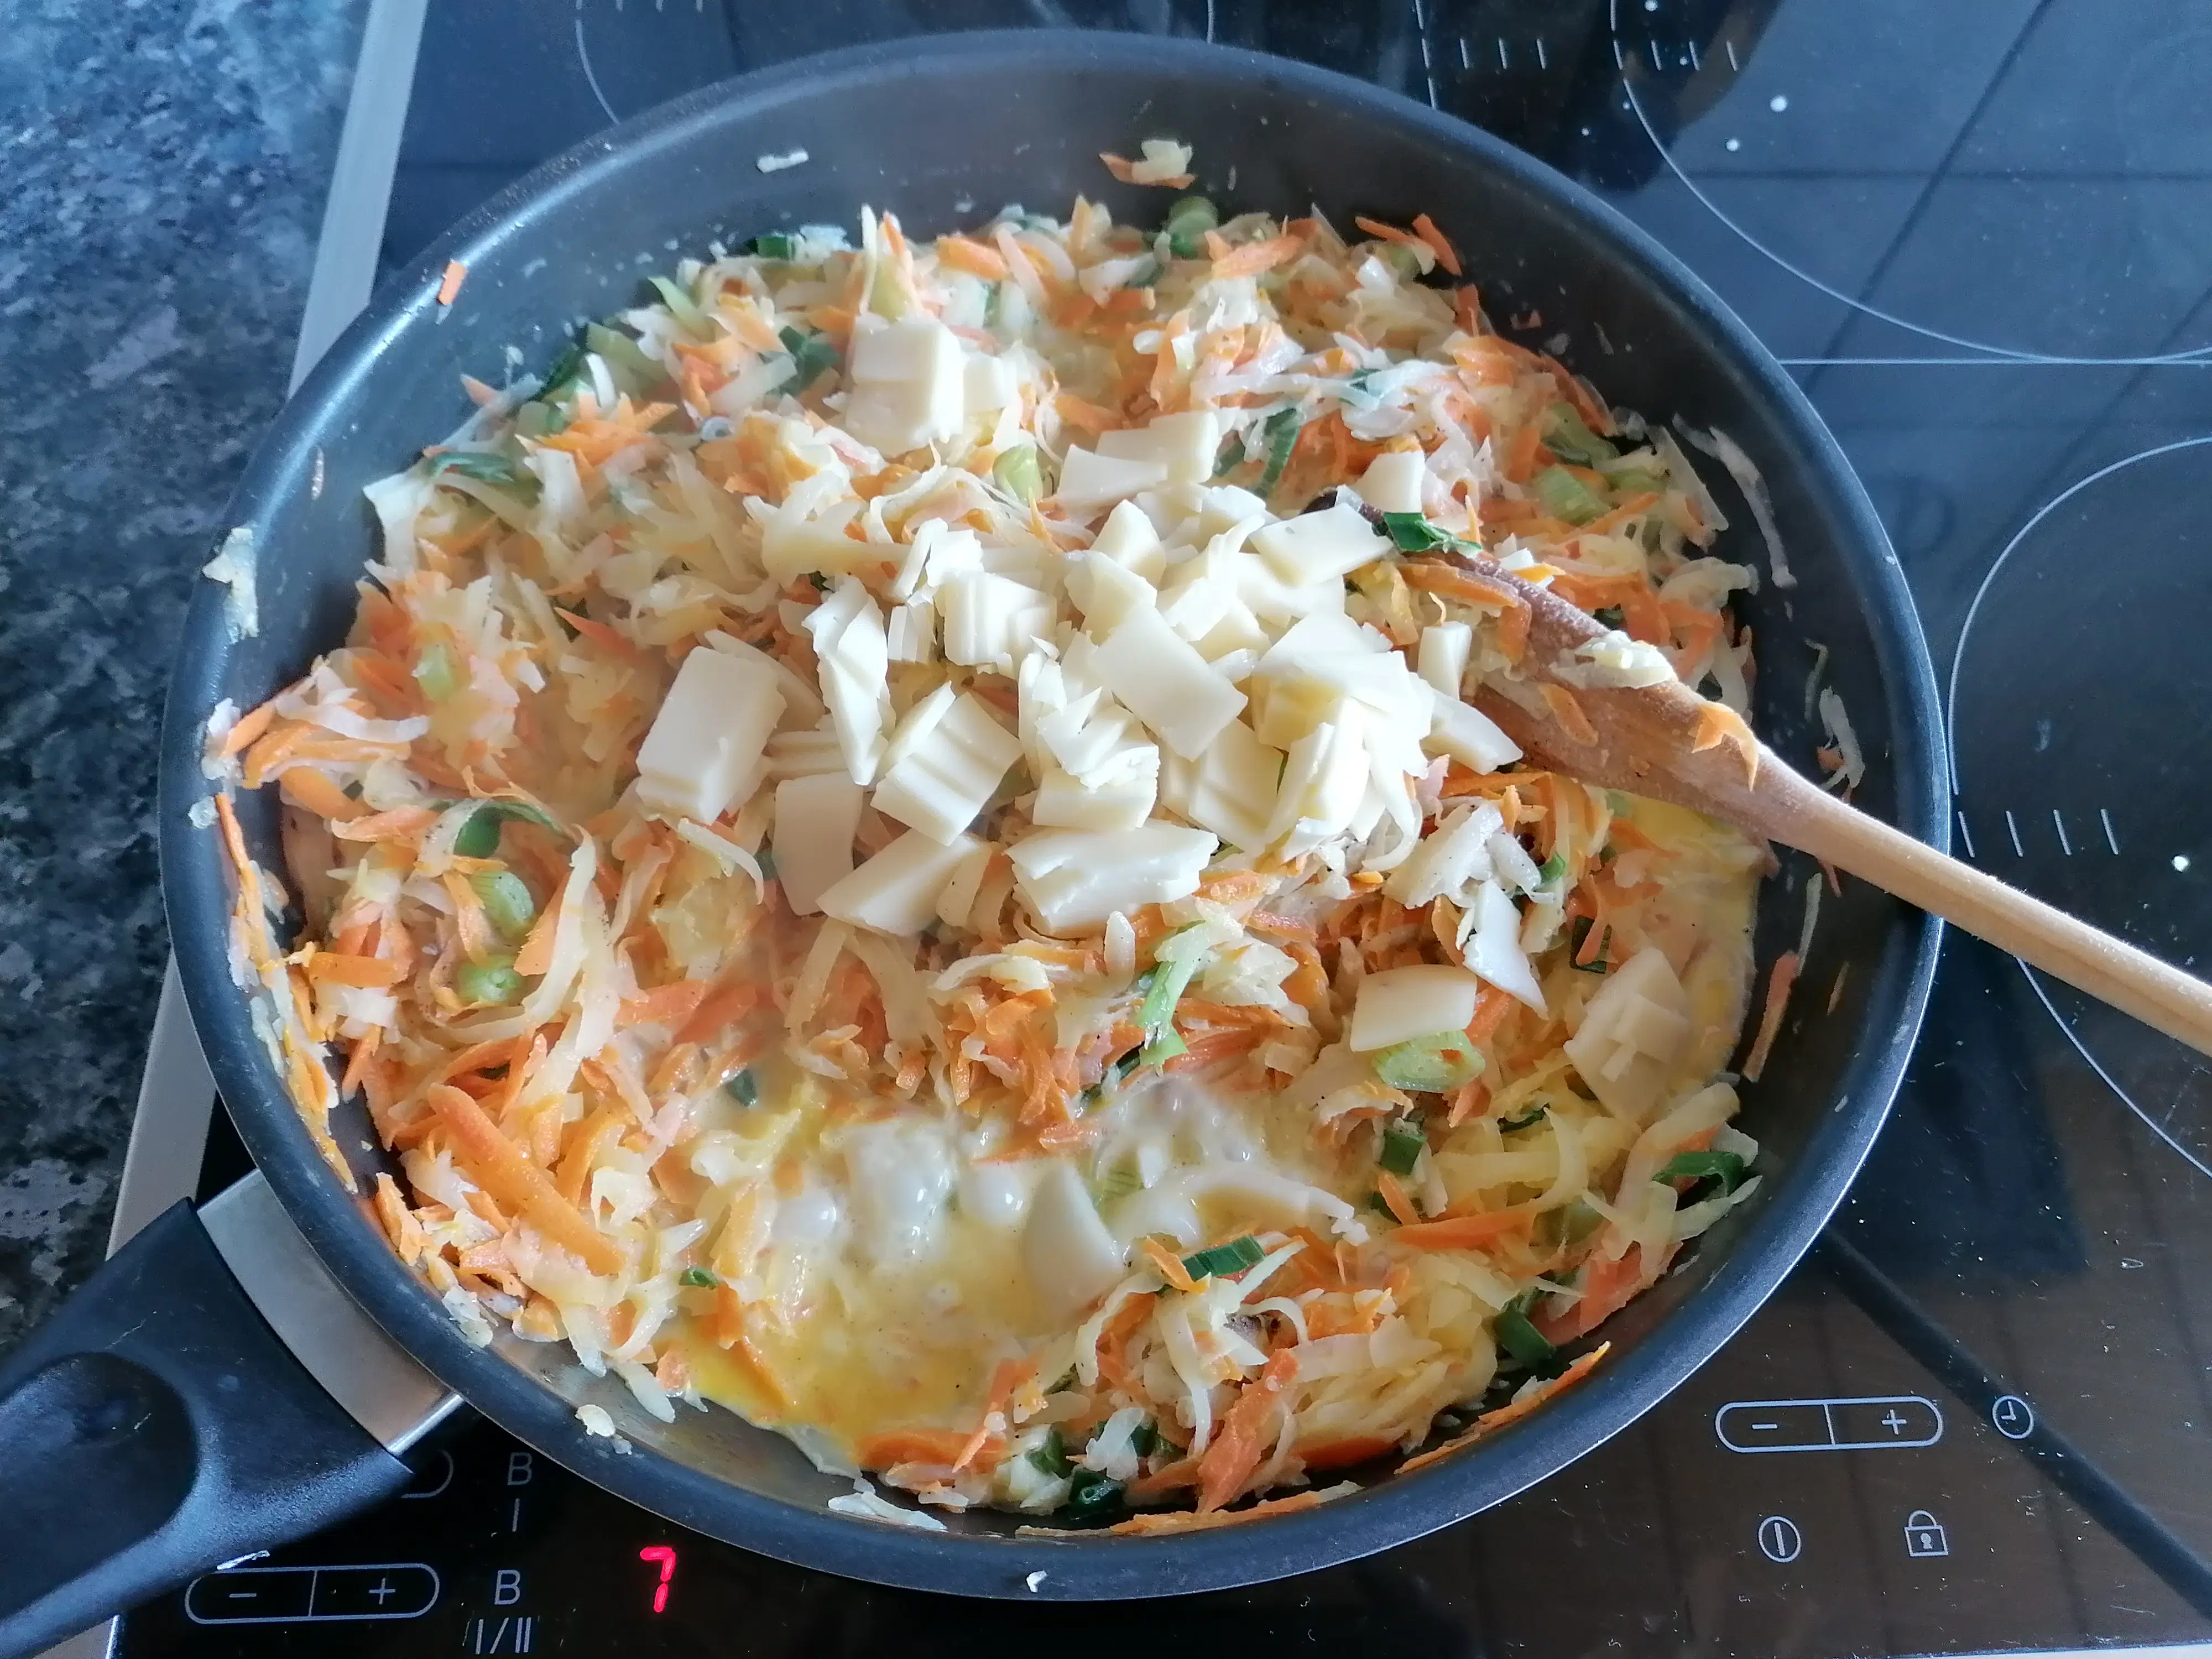 How to make creamy kohlrabi and cheese sauce.